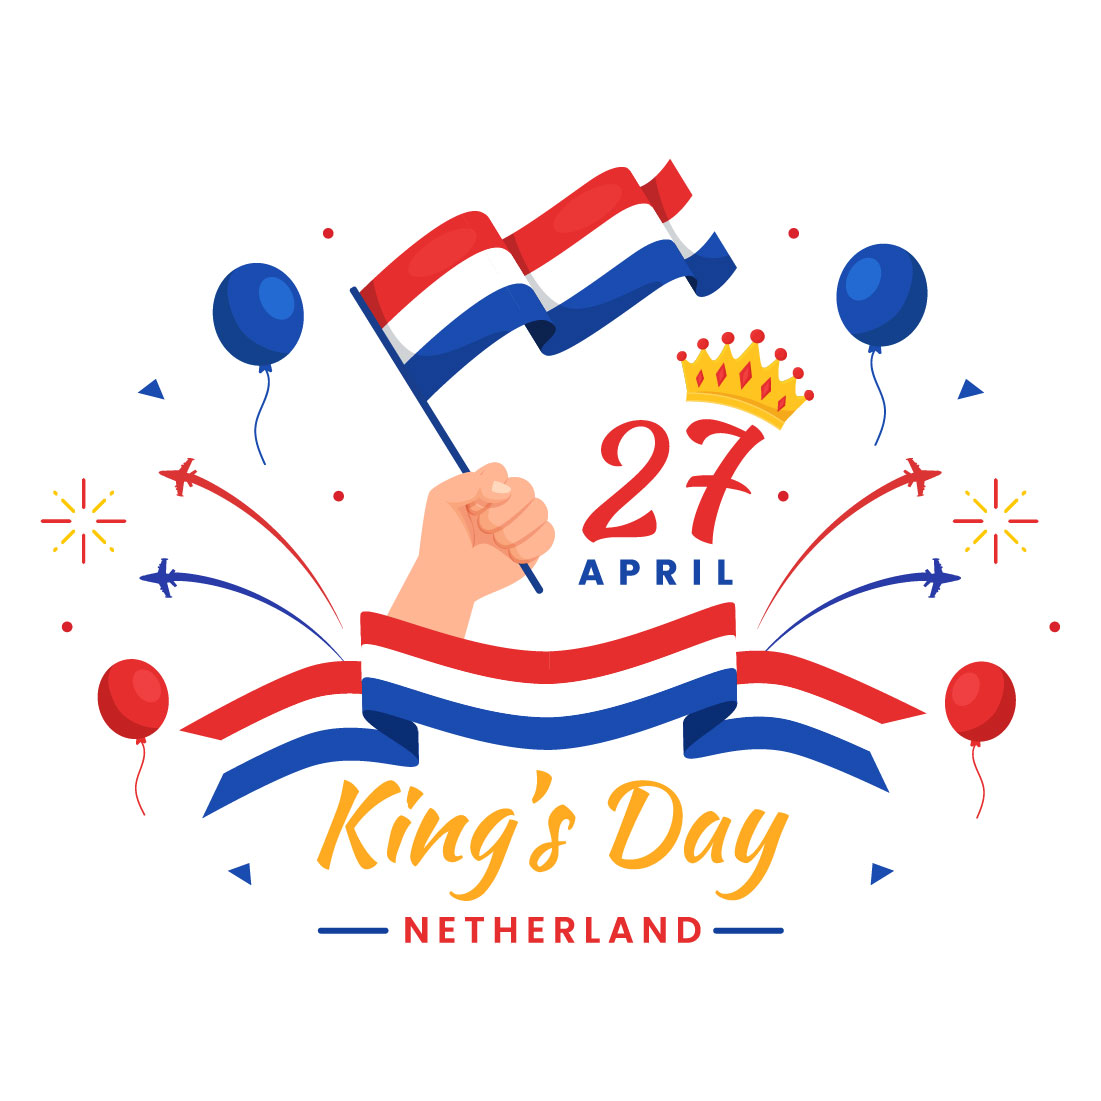 12 Kings Netherlands Day Illustration cover image.